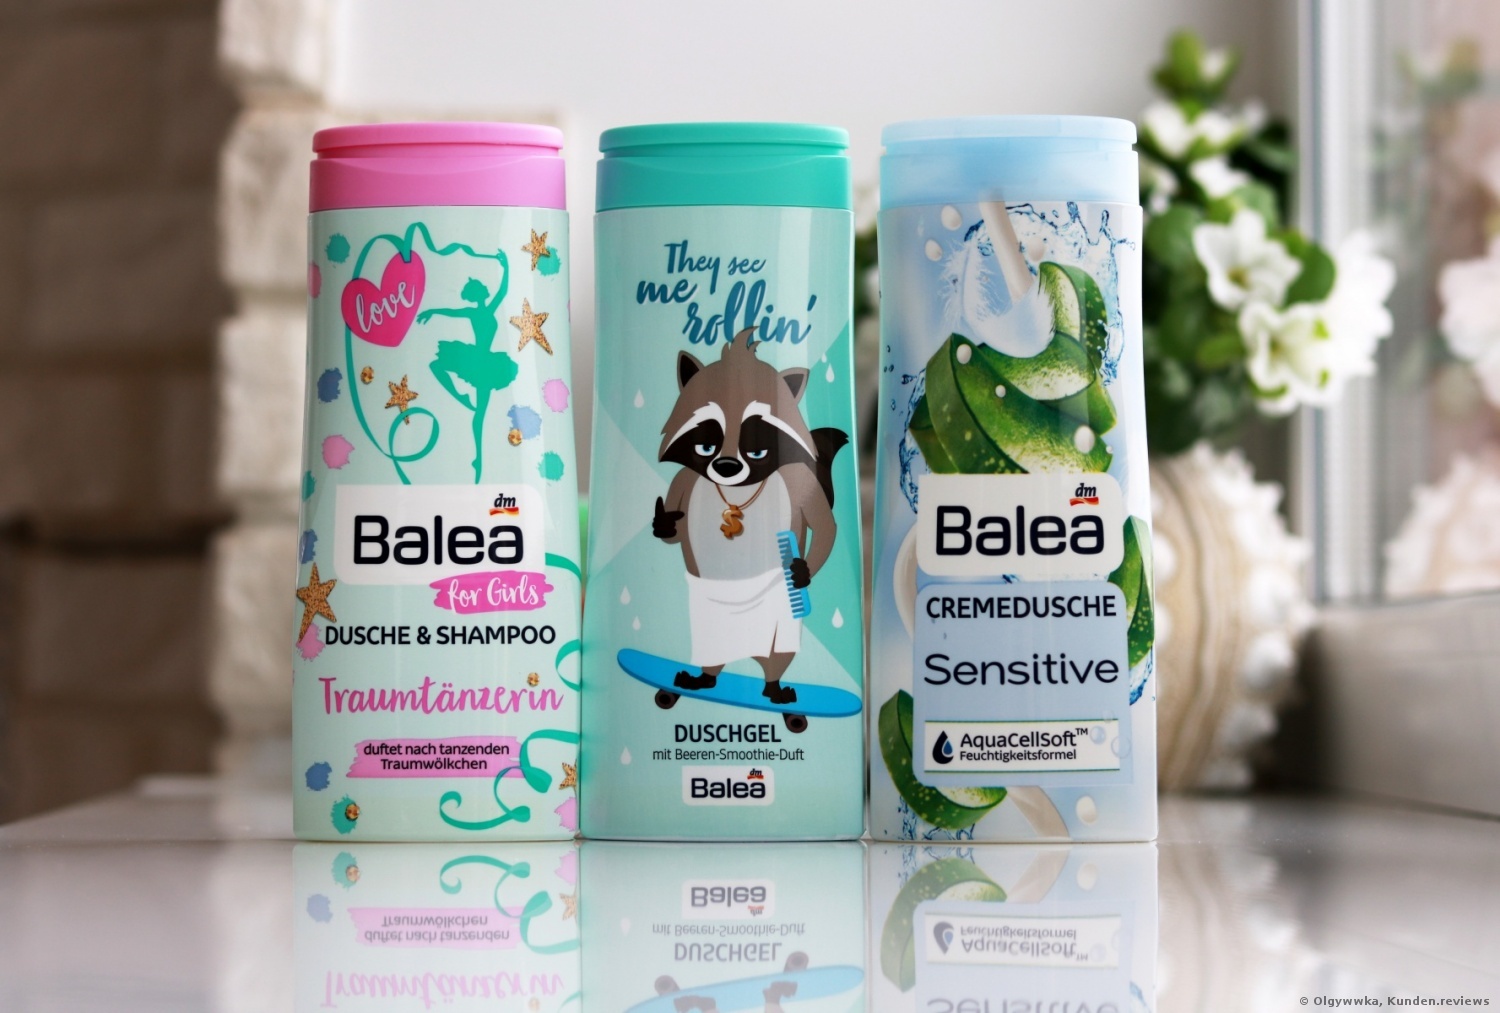 Balea Dusche & Shampoo for Girls Traumtänzerin Duschgel Foto